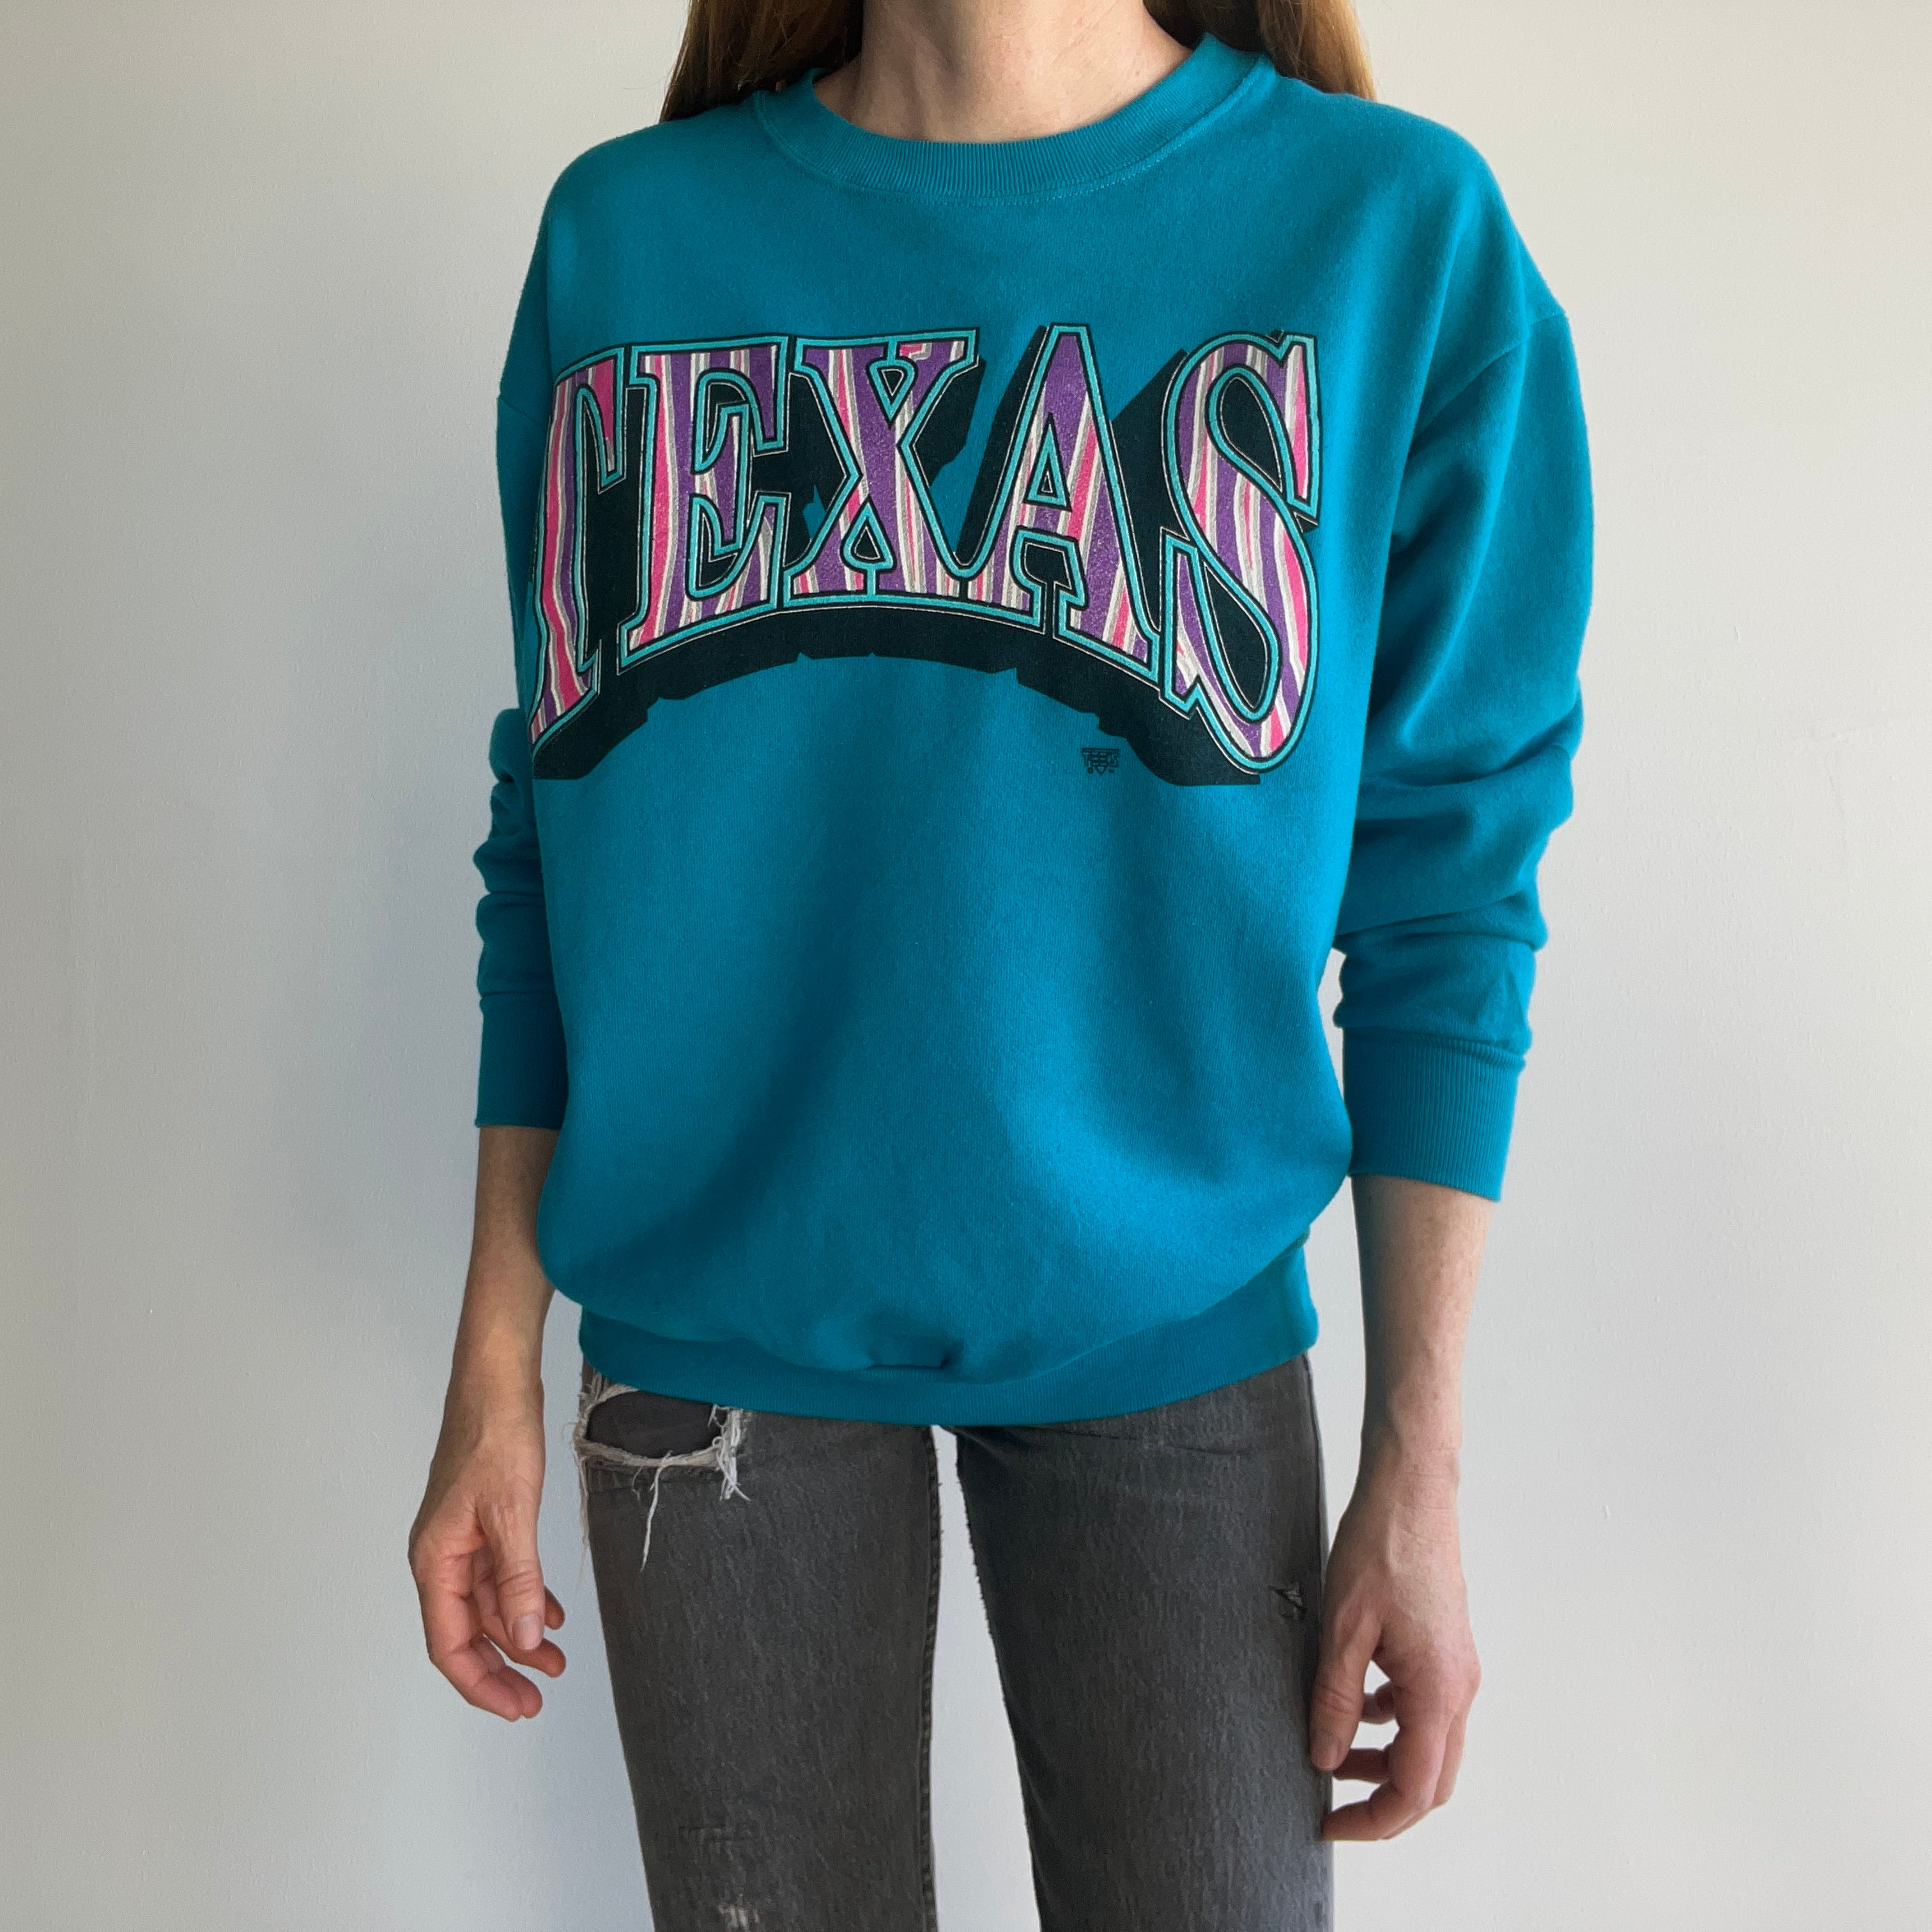 1980/90s Texas Sweatshirt